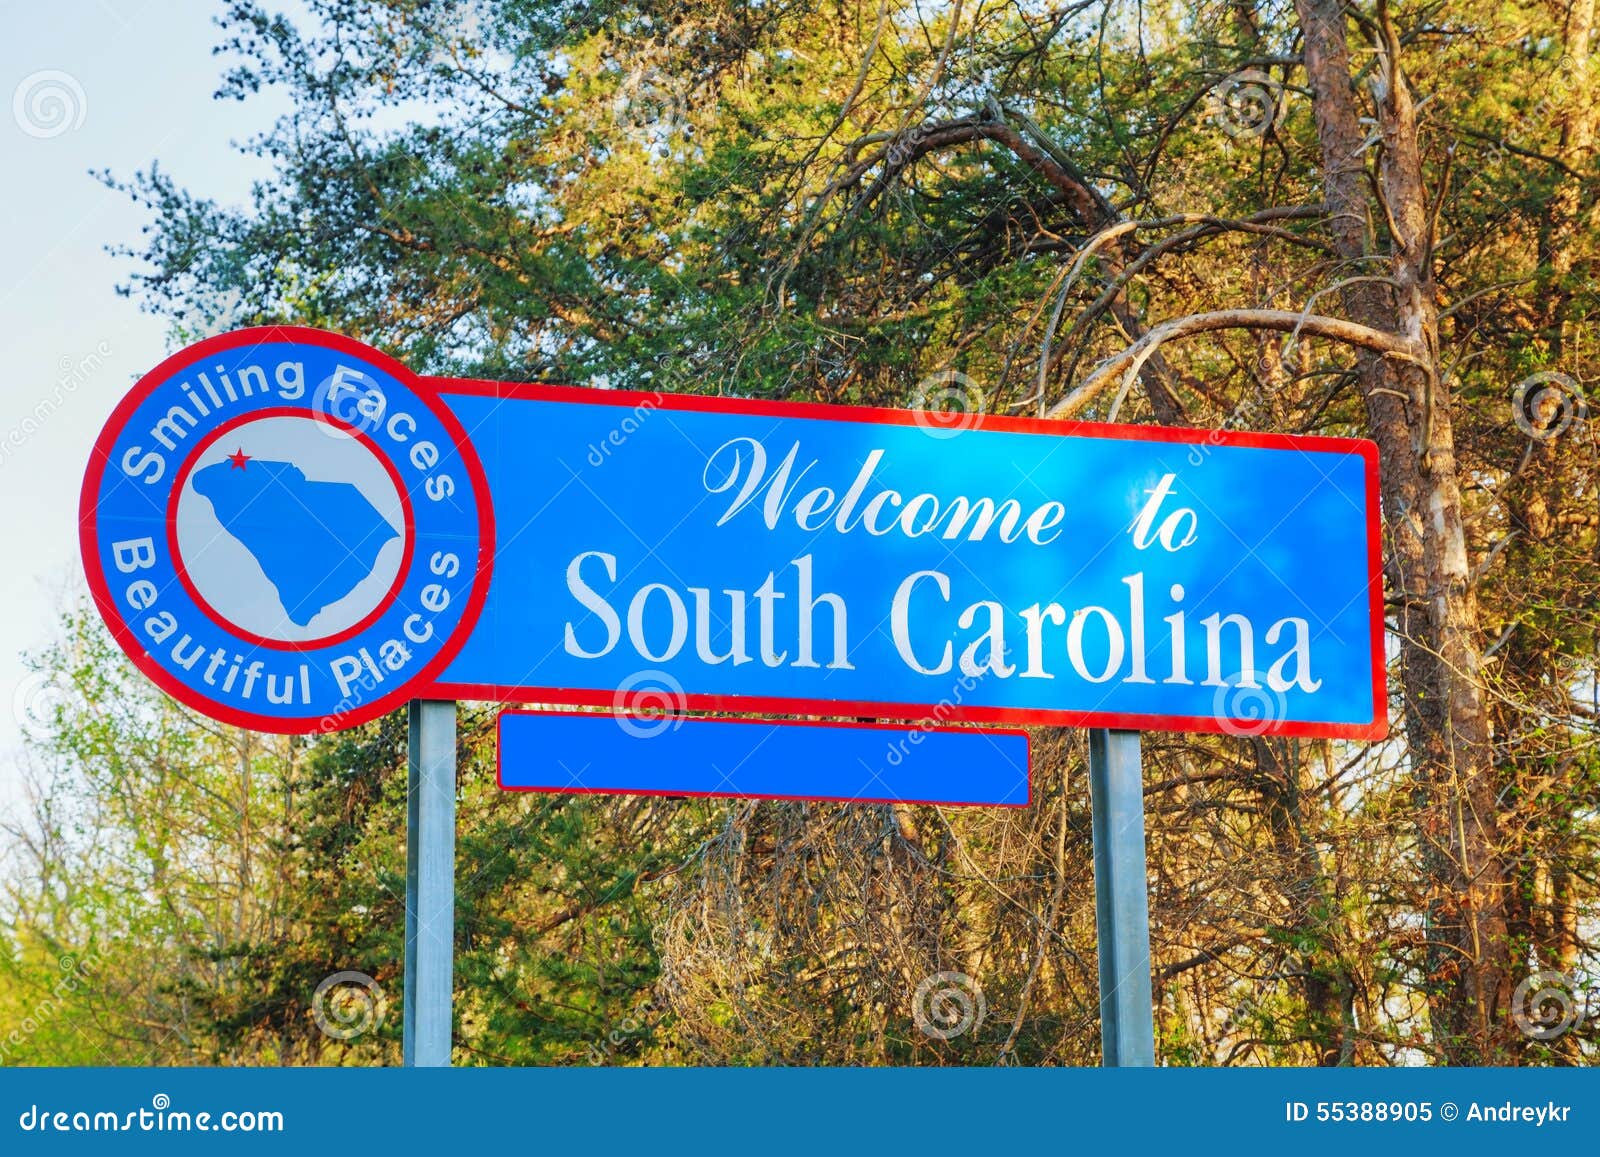 welcome to south carolina sign